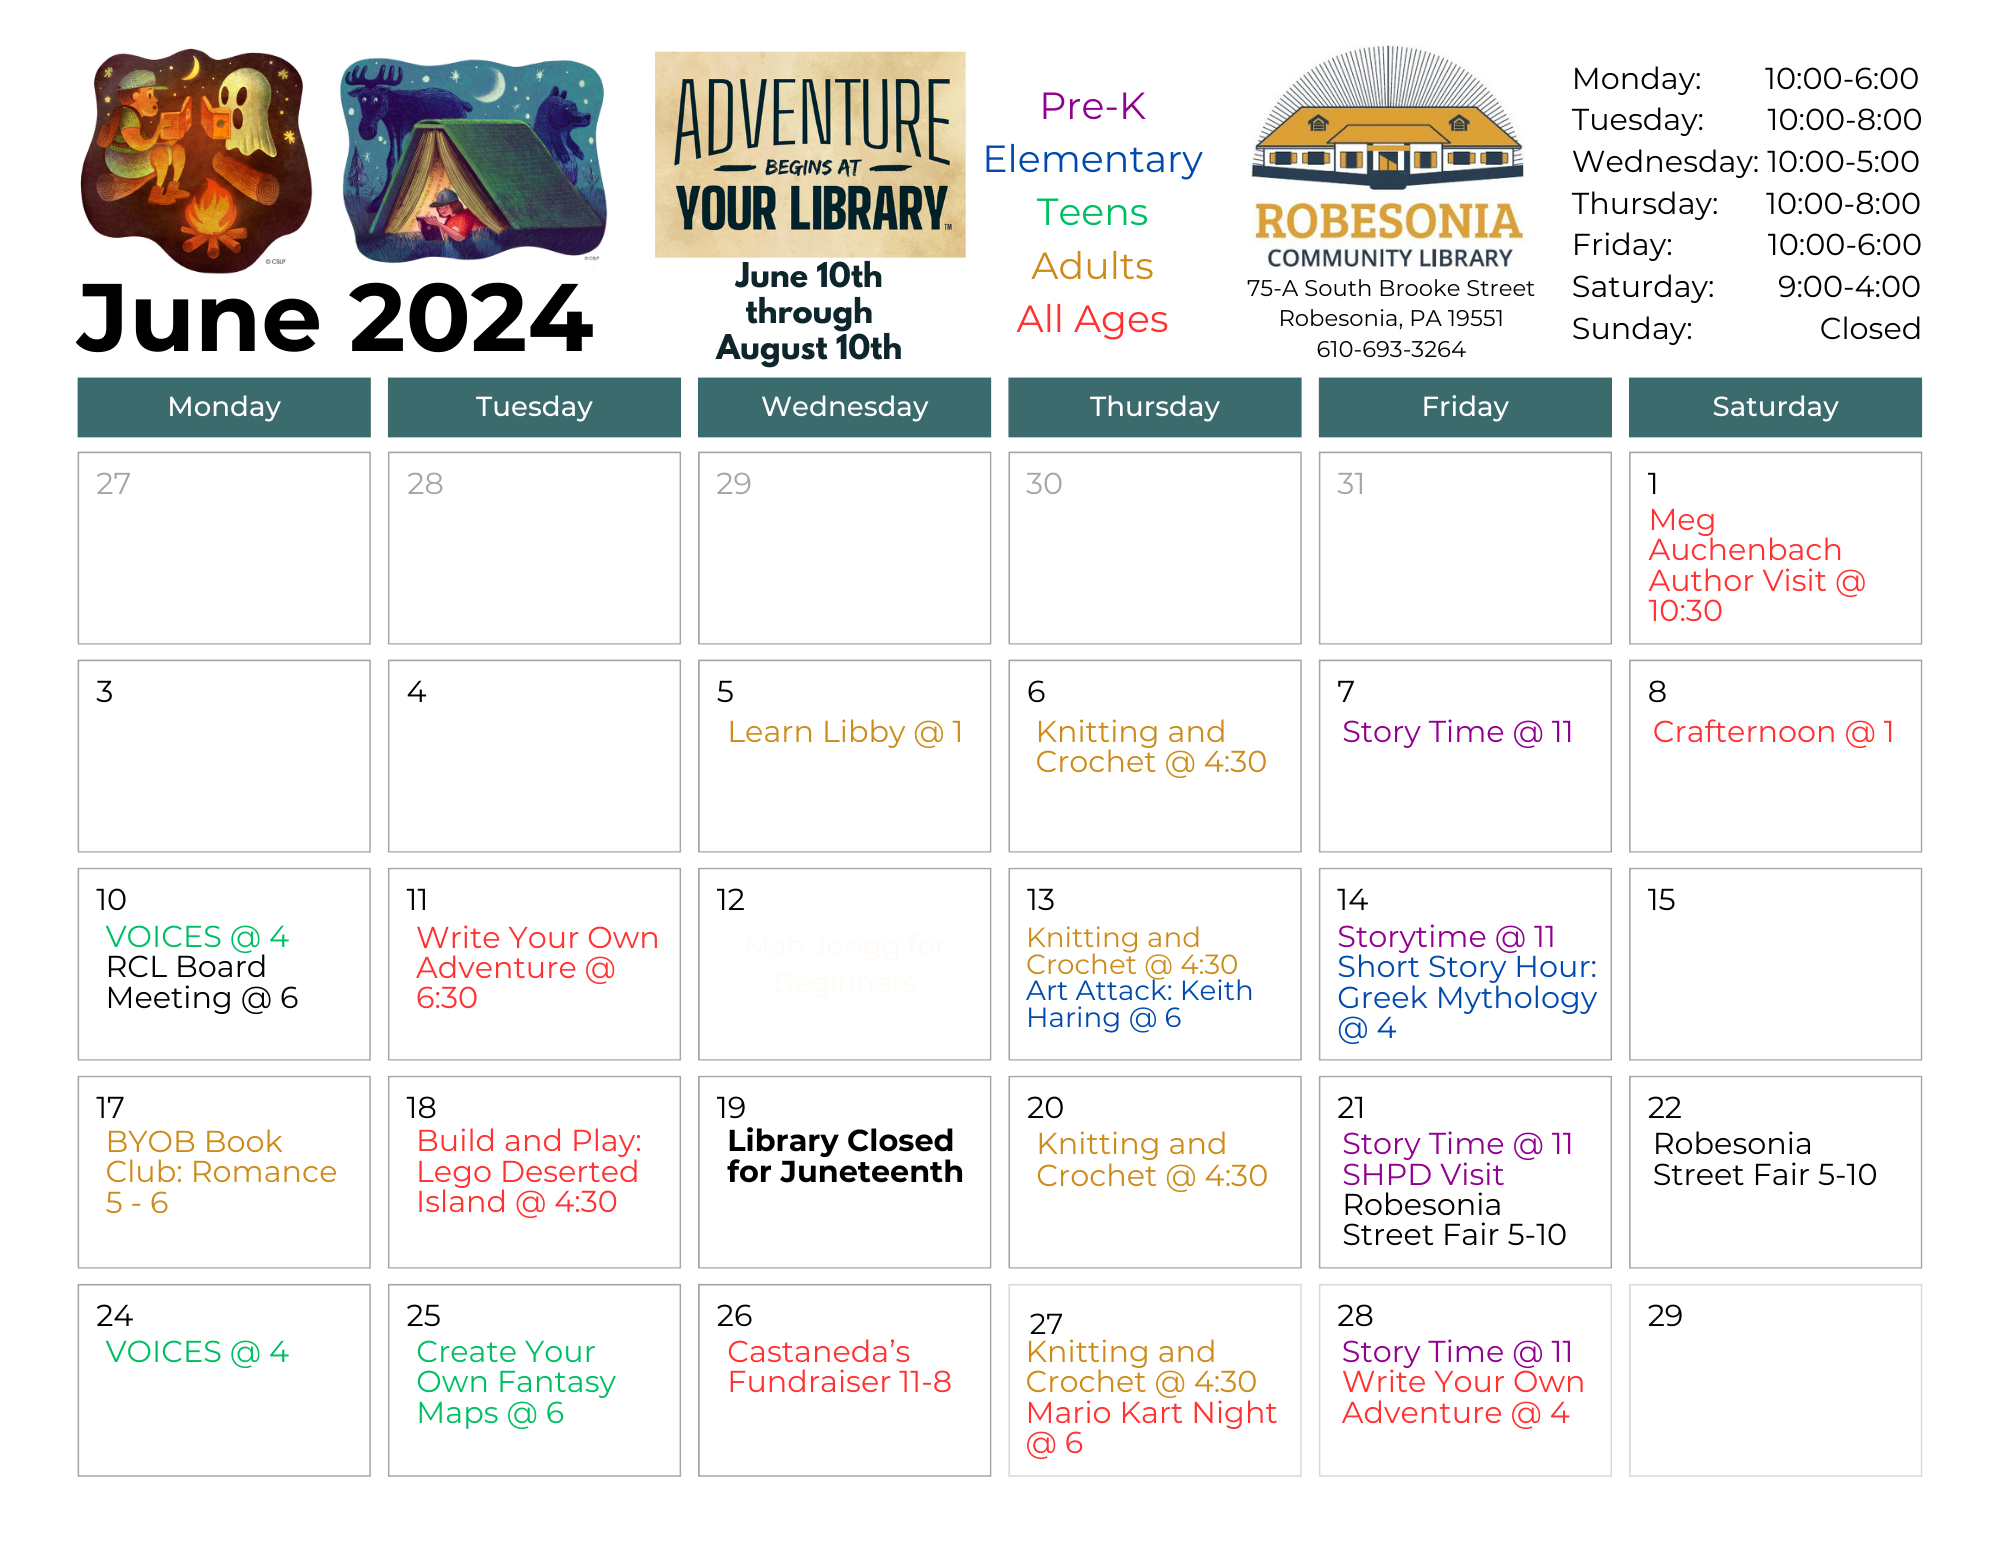 June's calendar of events